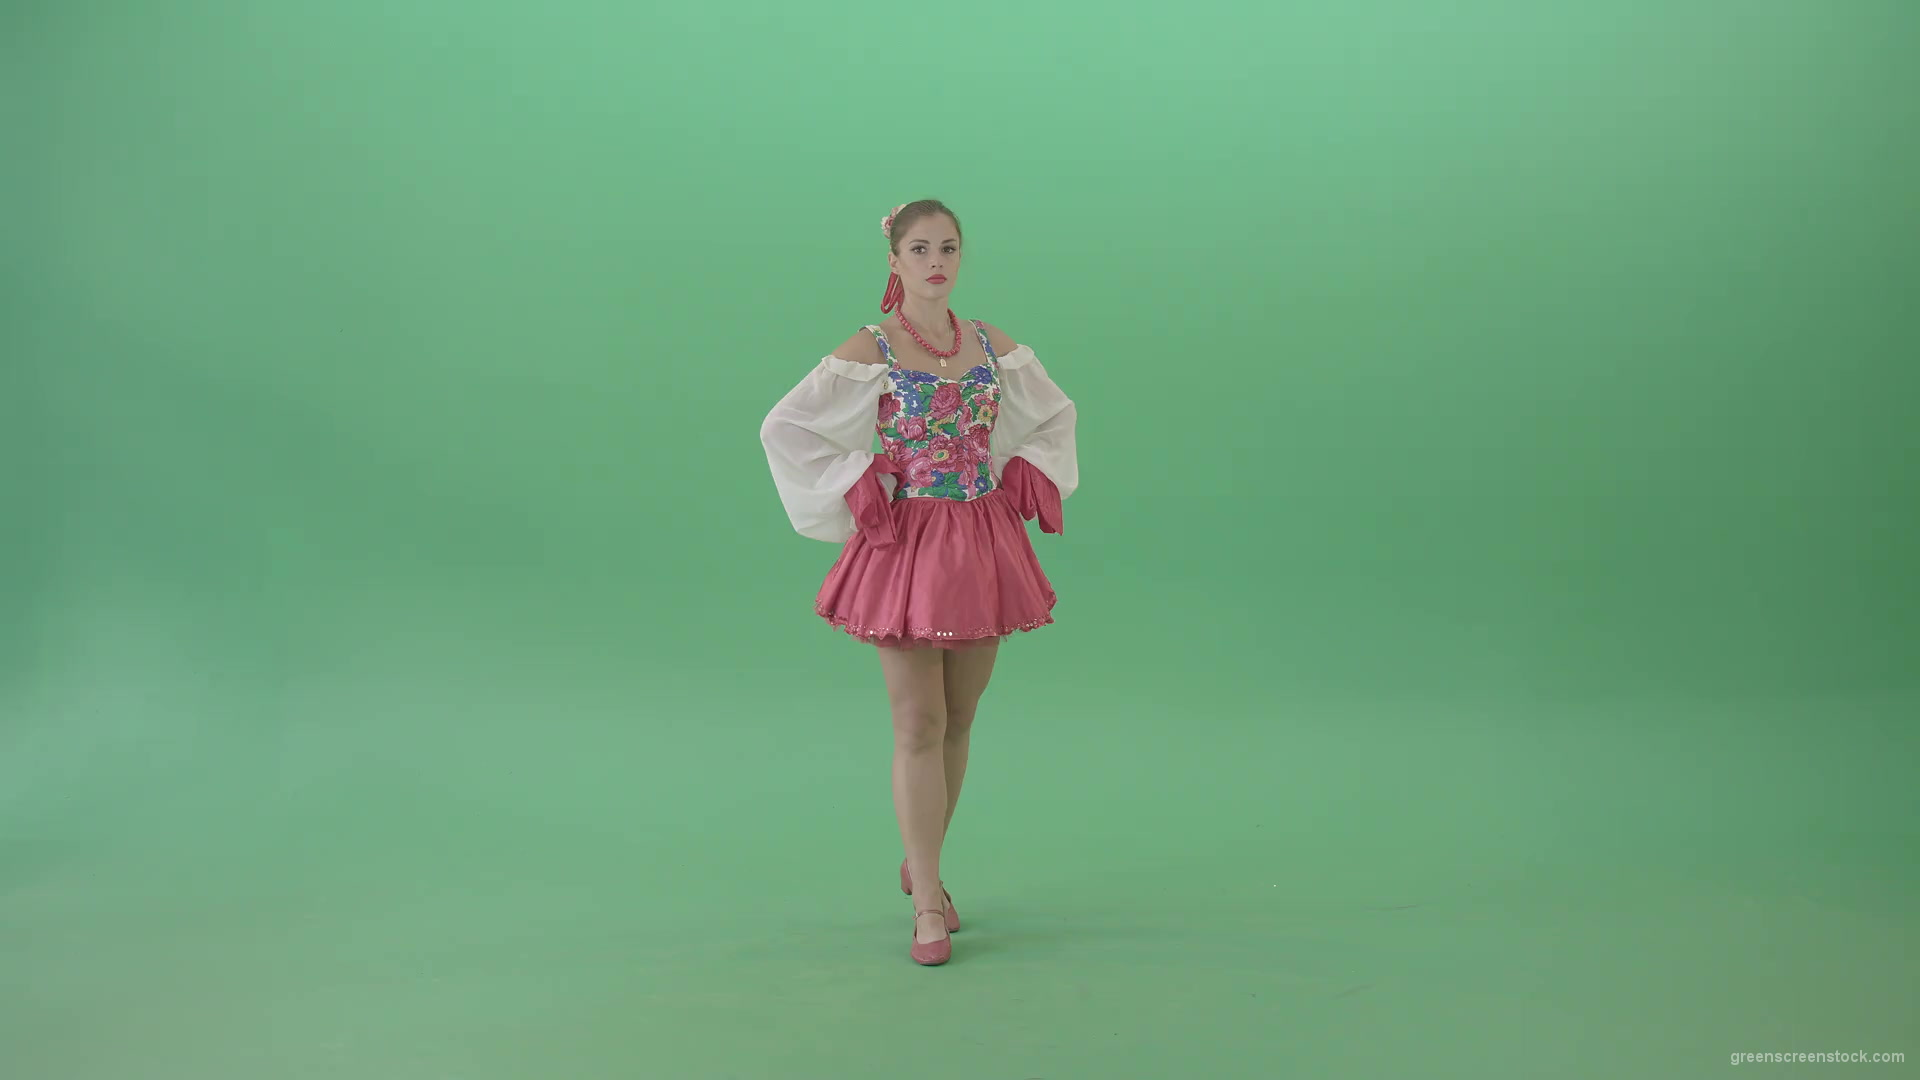 Ukrainian-Girl-spinning-in-dance-in-national-Ukraine-costume-isolated-on-Green-Screen-1920_001 Green Screen Stock